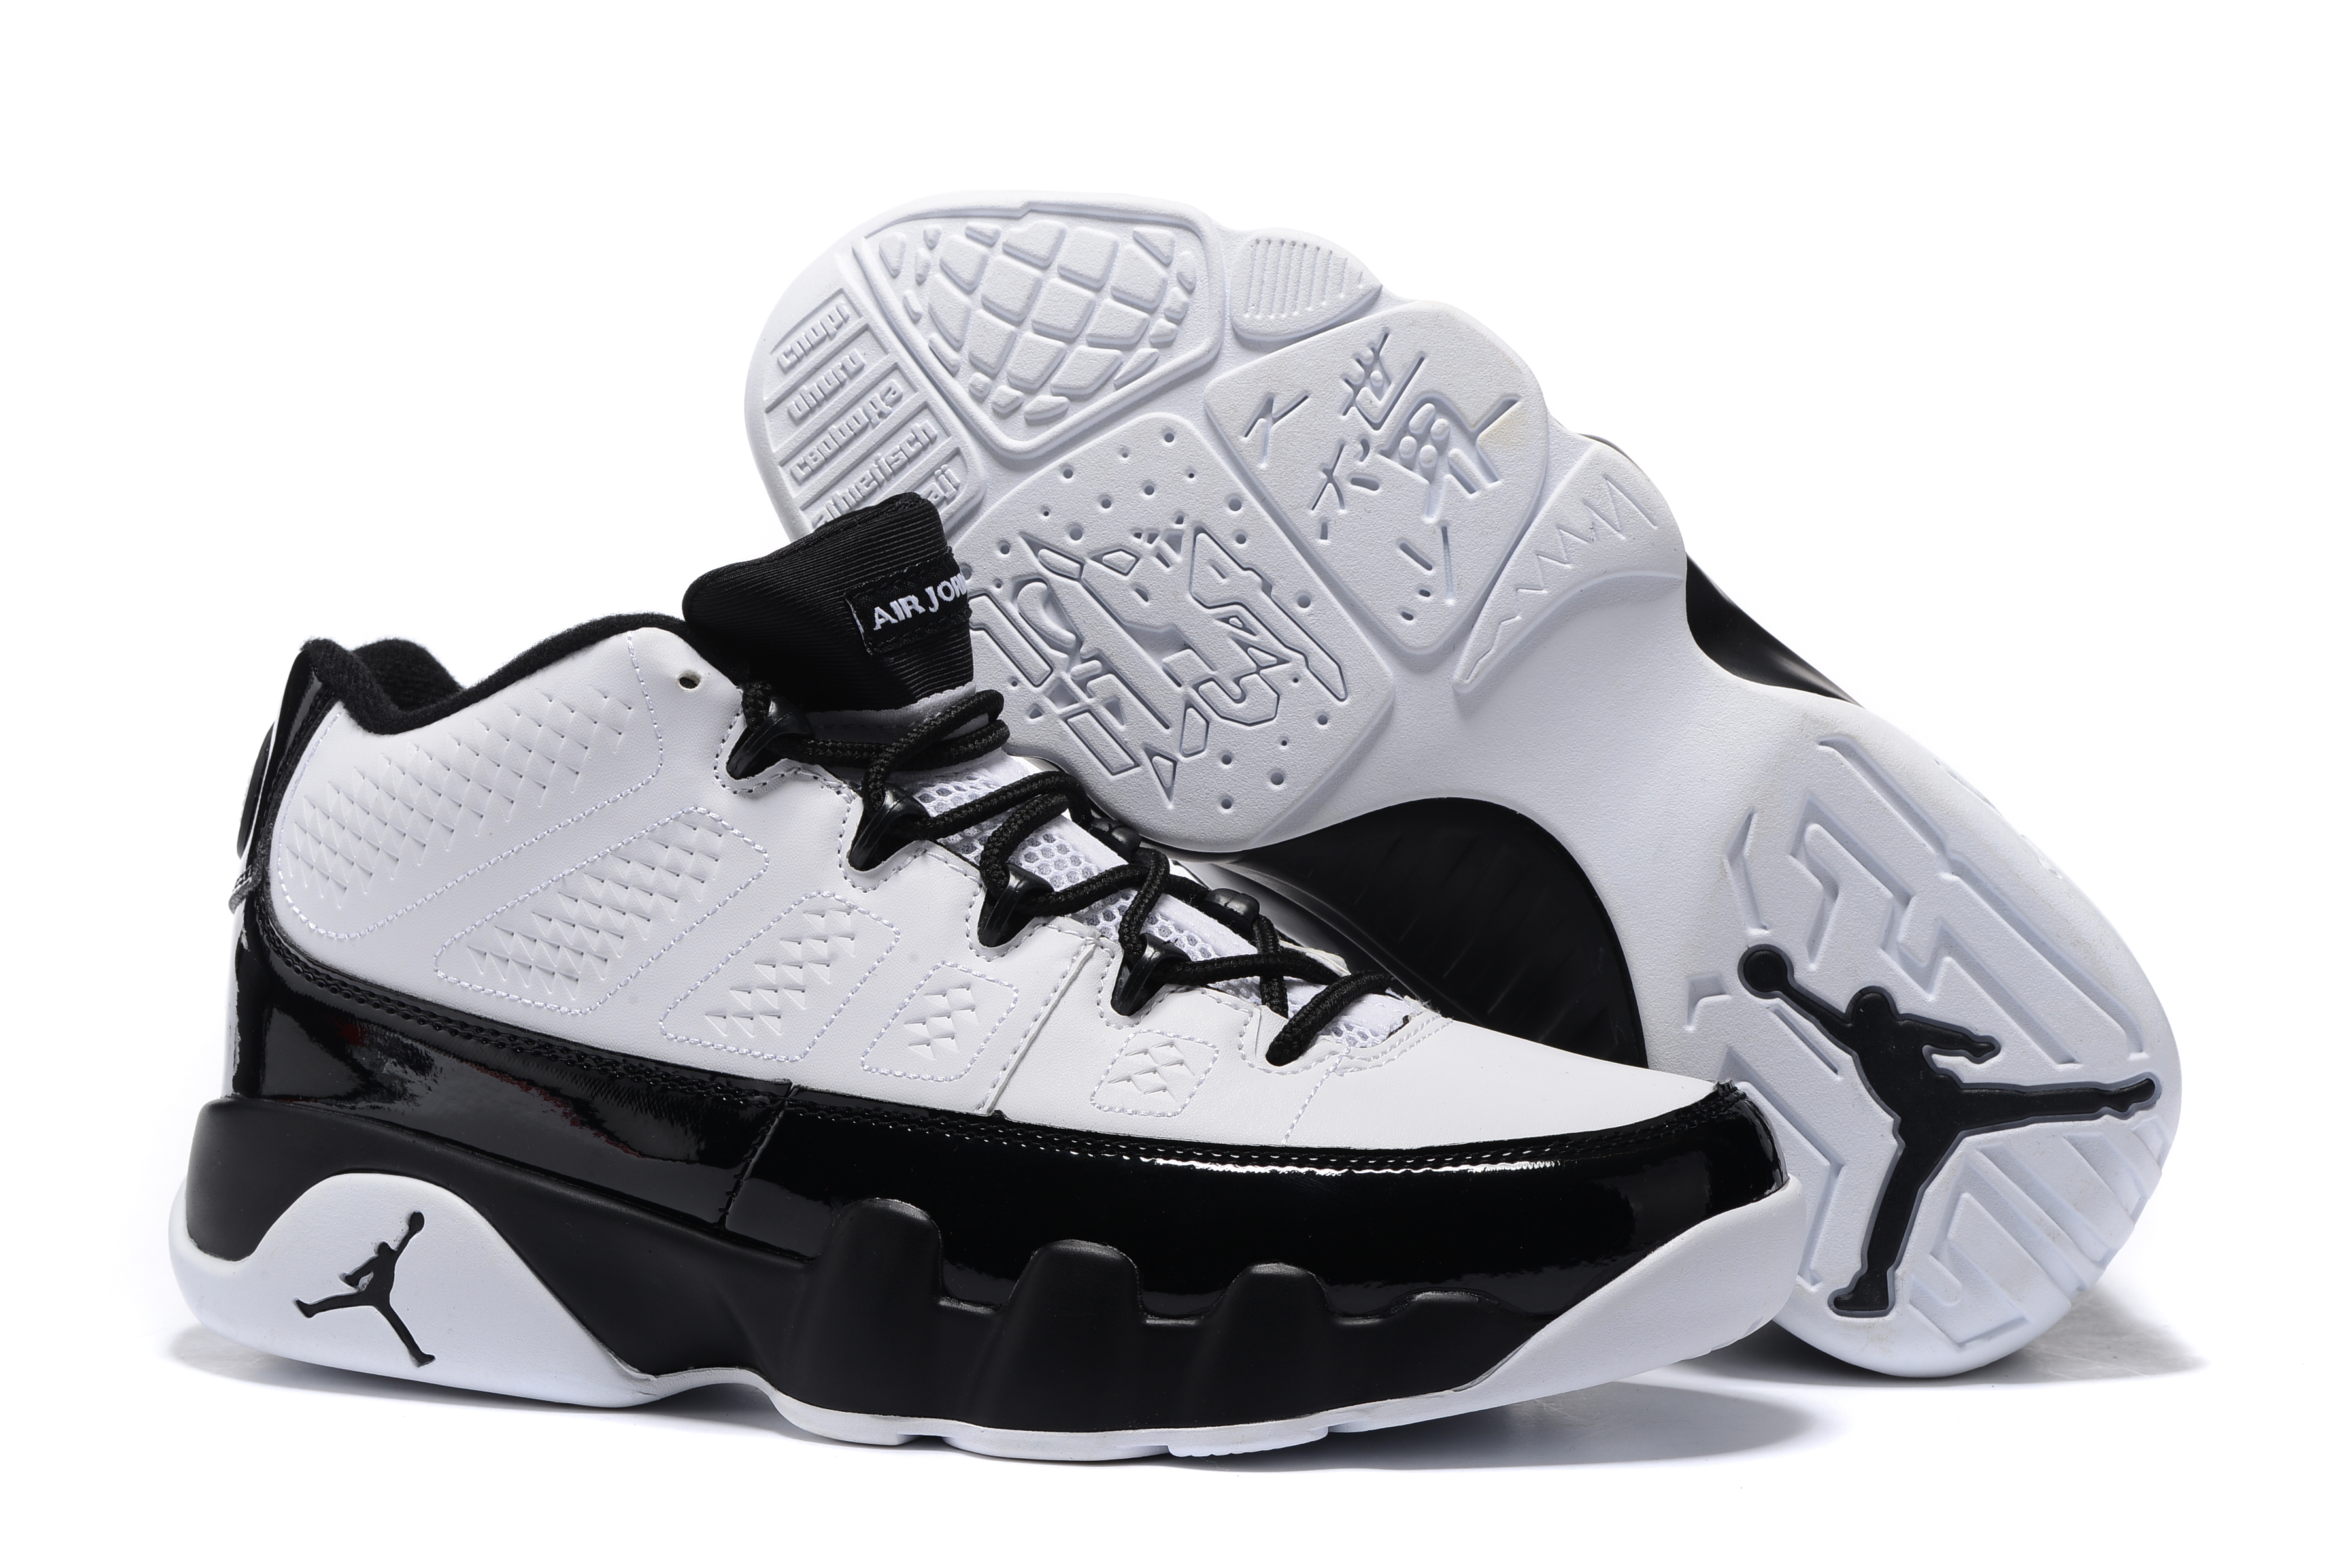 New Air Jordan 9 Retro Low White/Black Men's Basketball ...